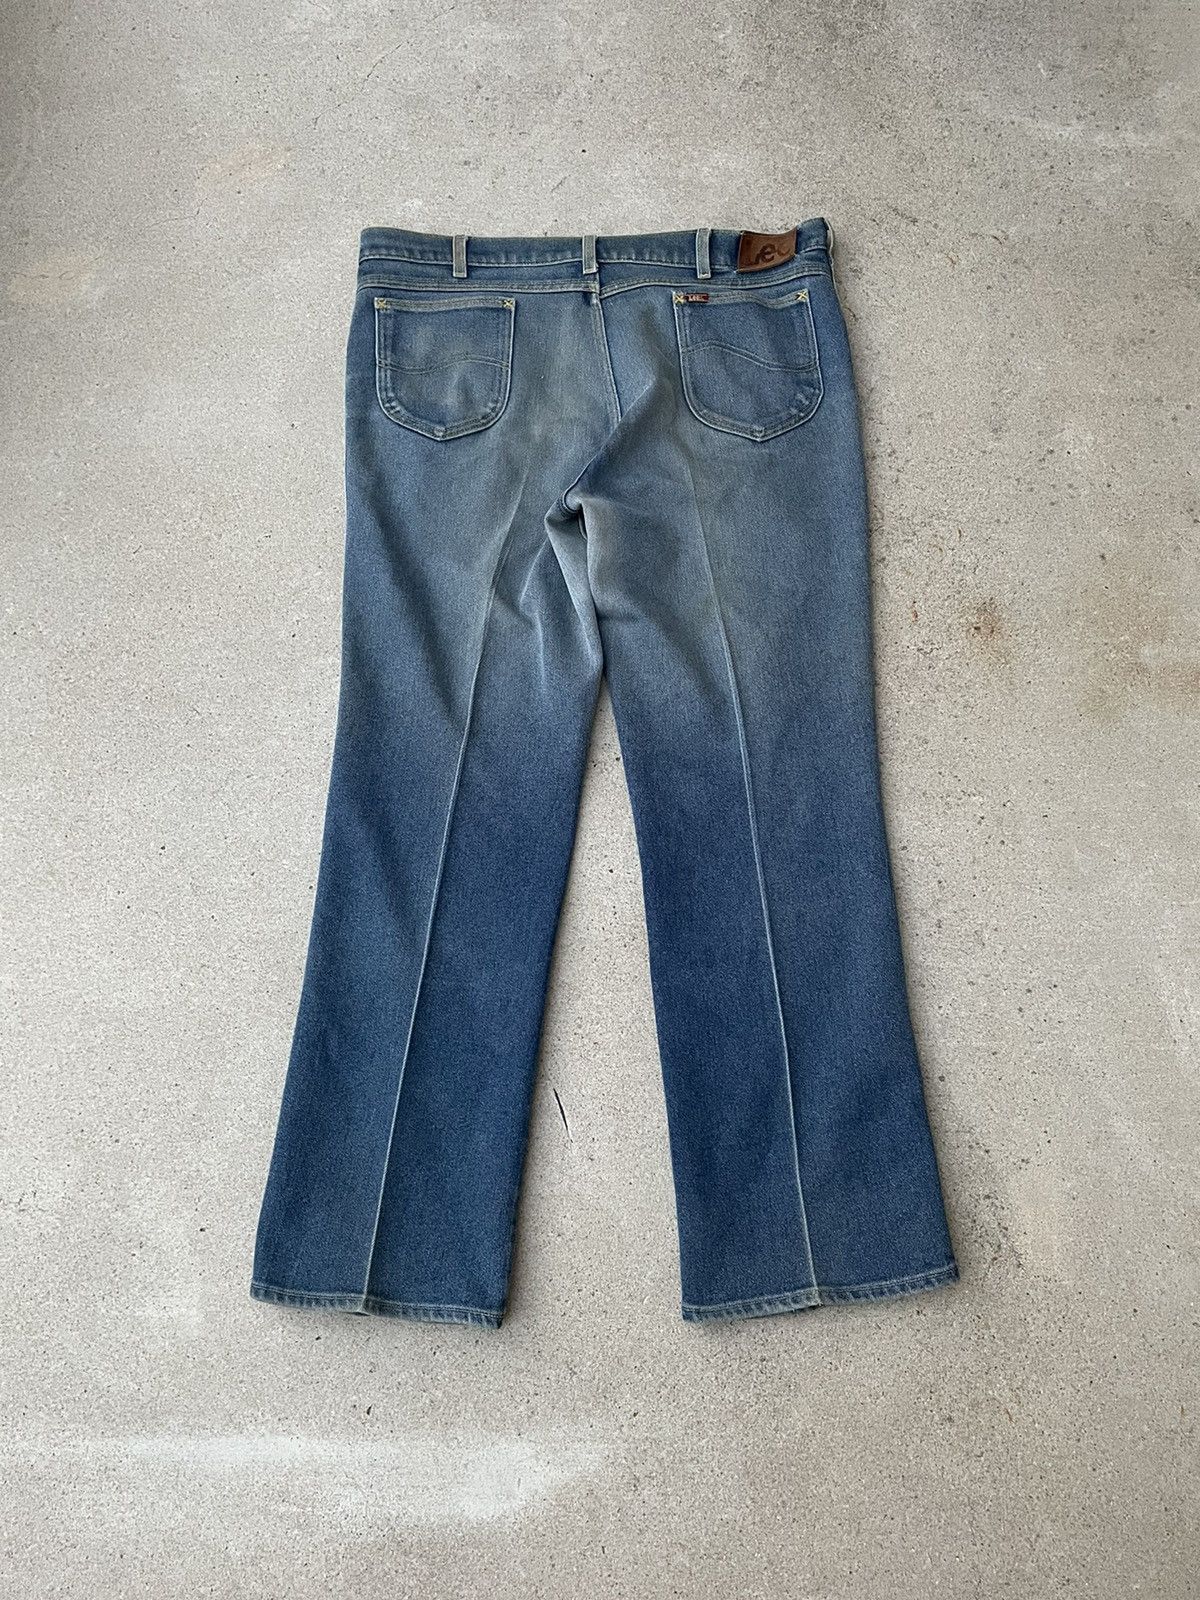 Vintage Vintage 70s Lee Bootcut Distressed Mud Wash Jeans Mens 40x32 Size US 40 / EU 56 - 2 Preview